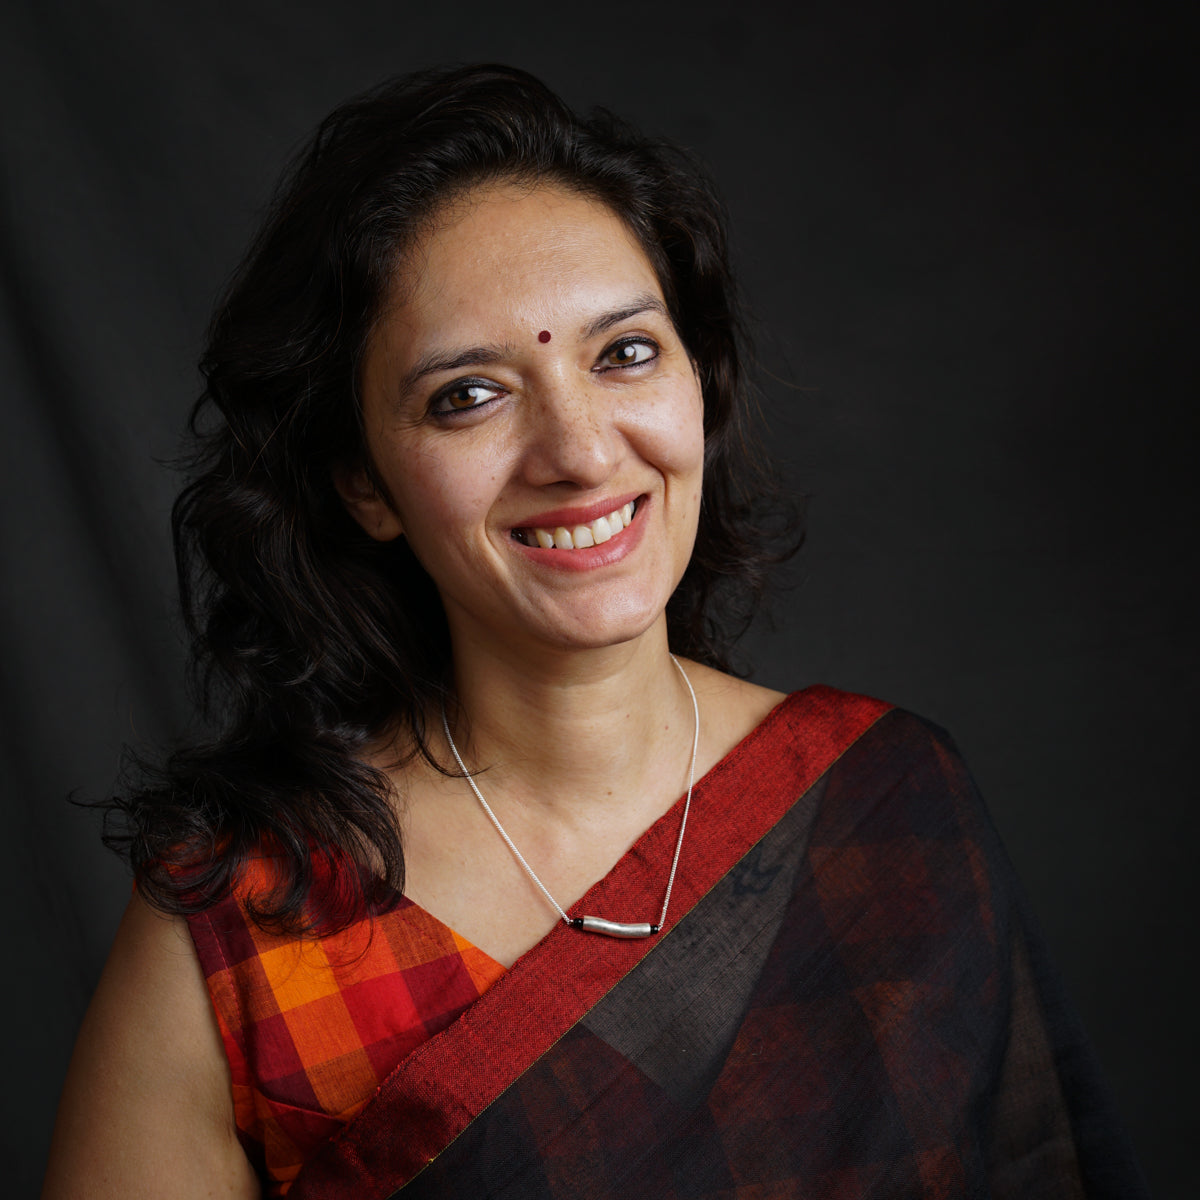 a woman in a sari smiling at the camera